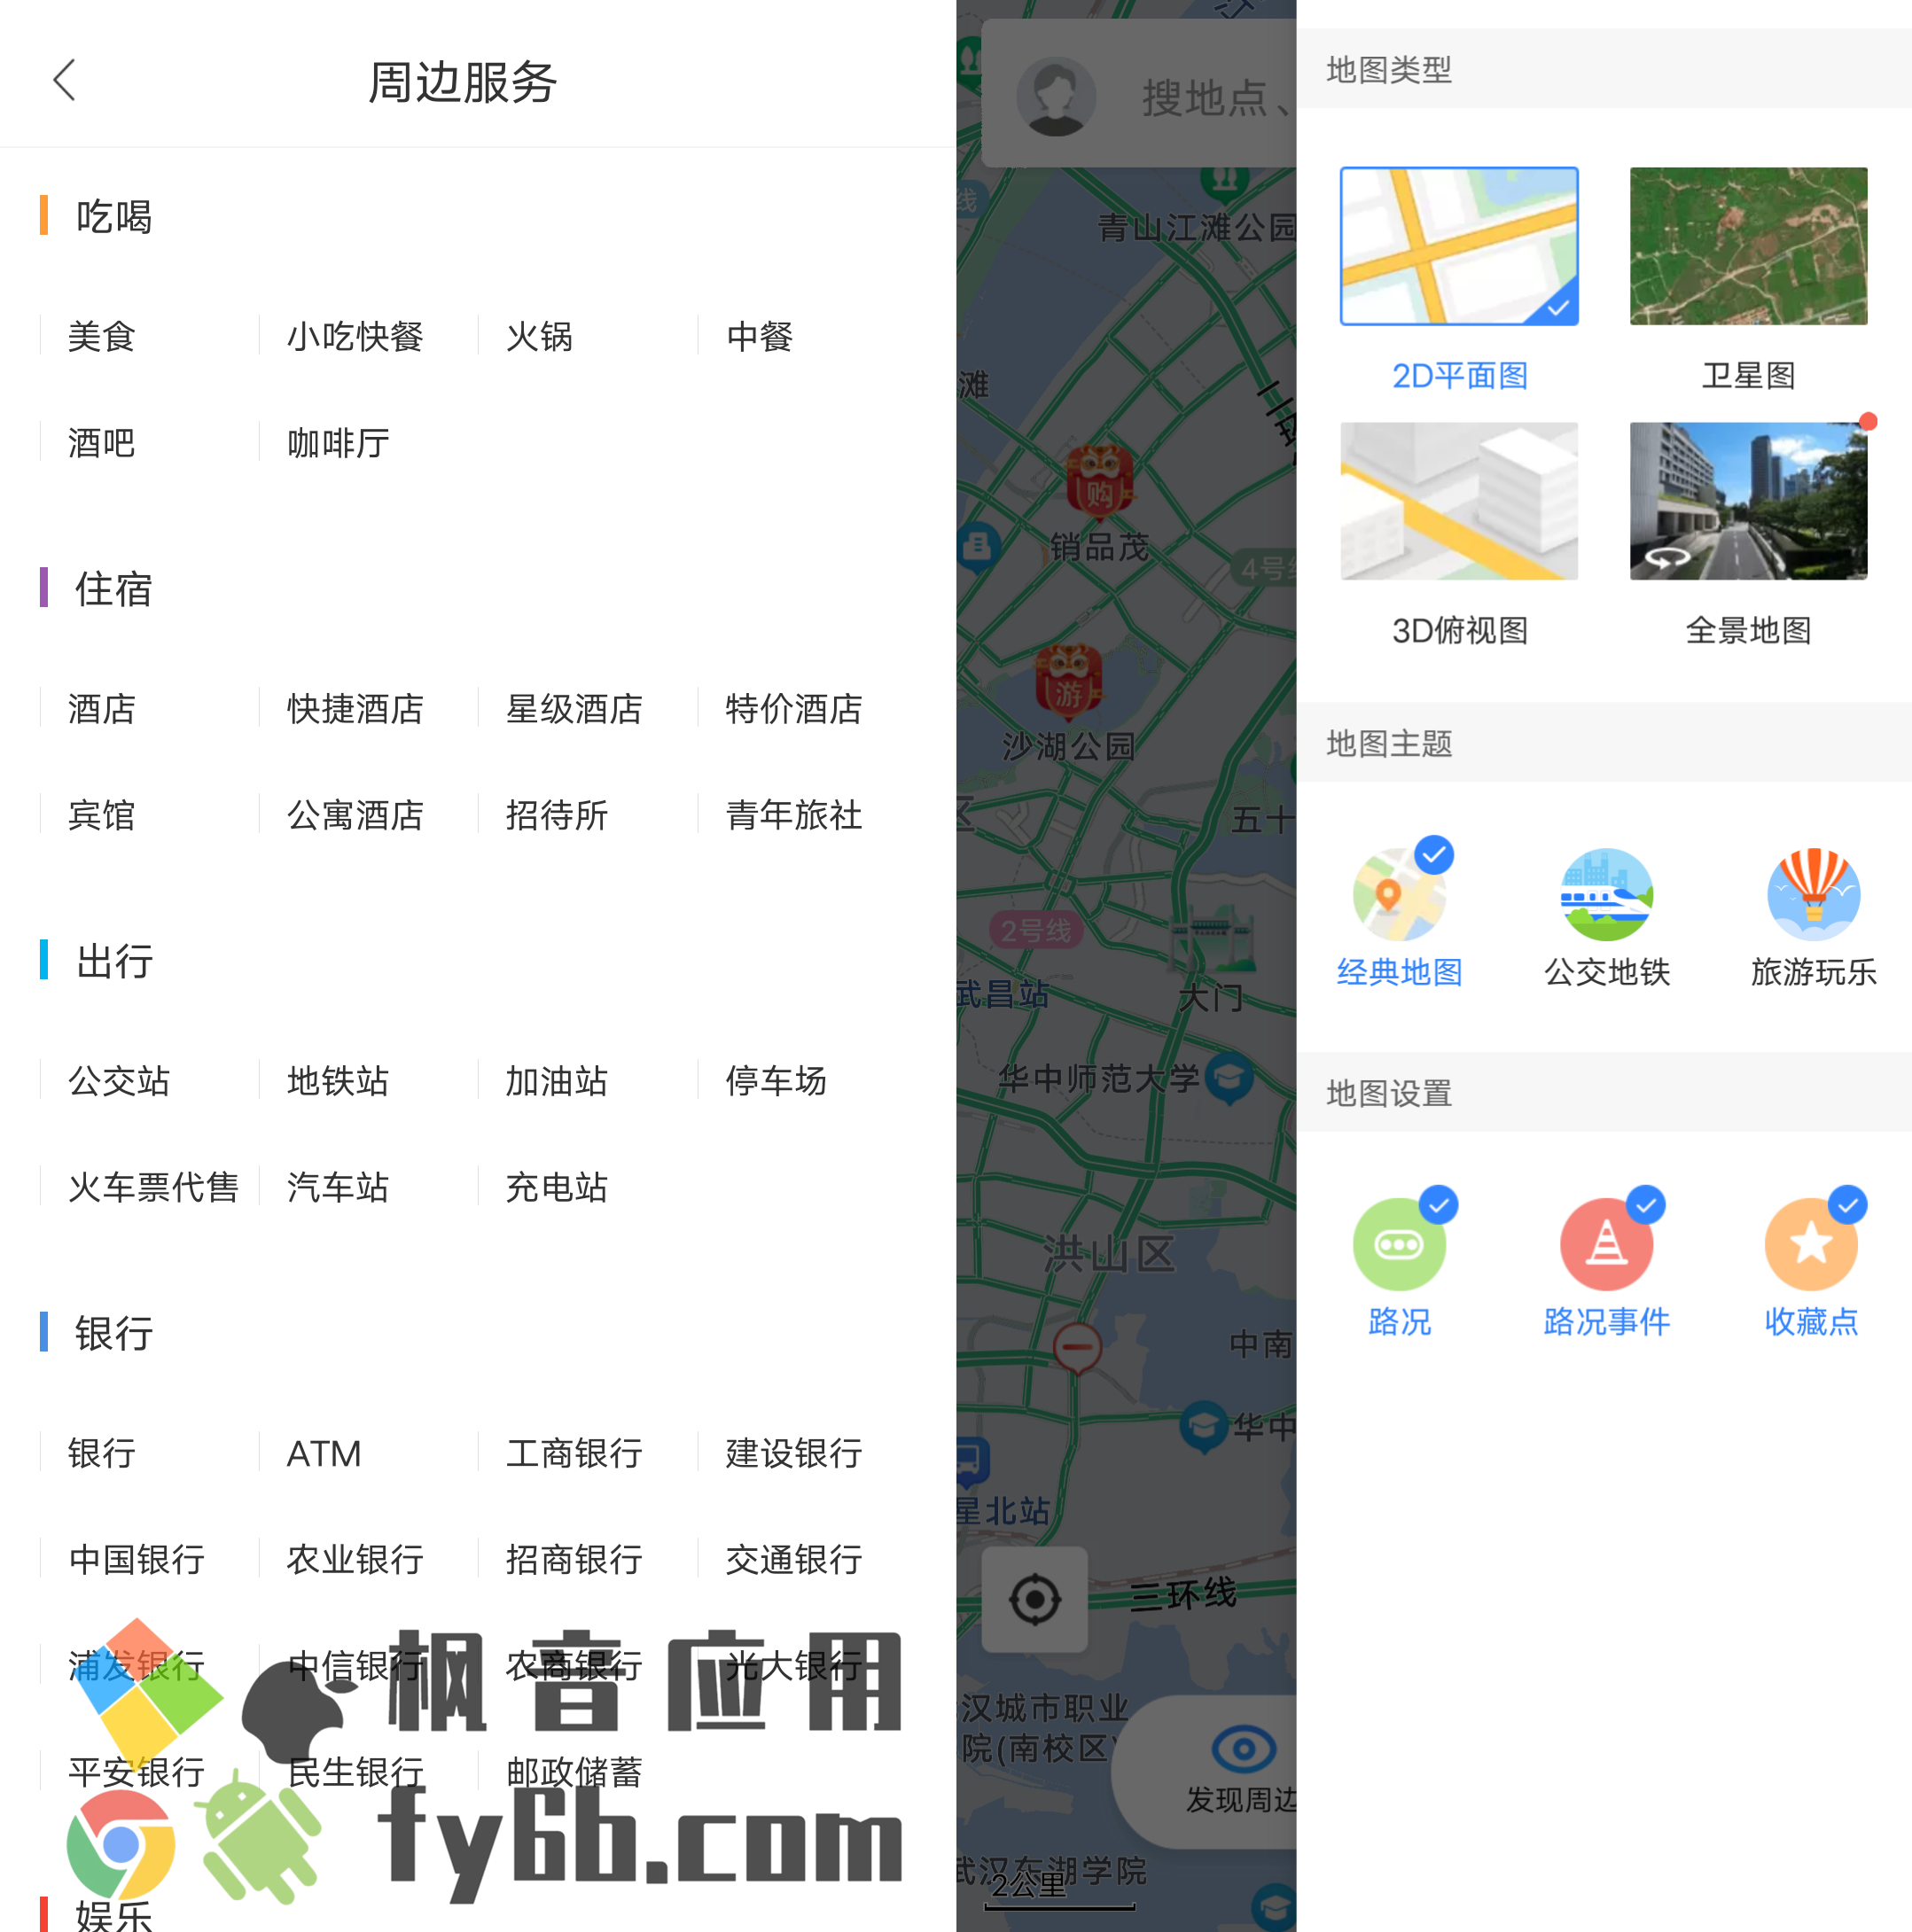 Android 百度地图_10.21.0 订制清爽版